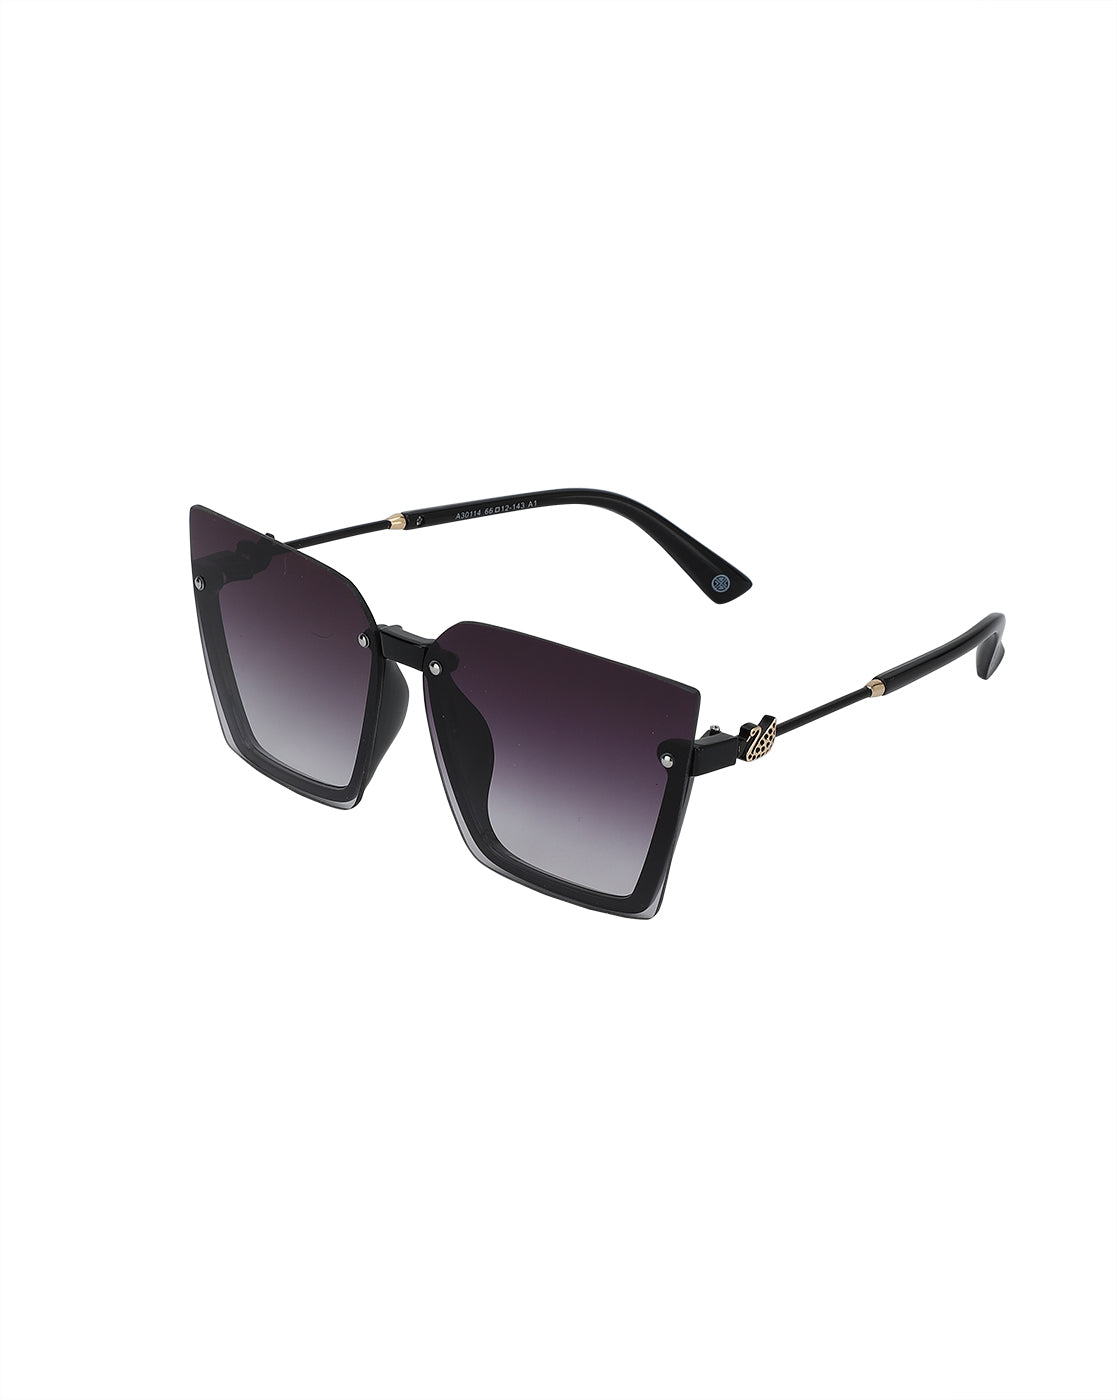 Carlton London Half Rim Oversized Sunglasses For Women